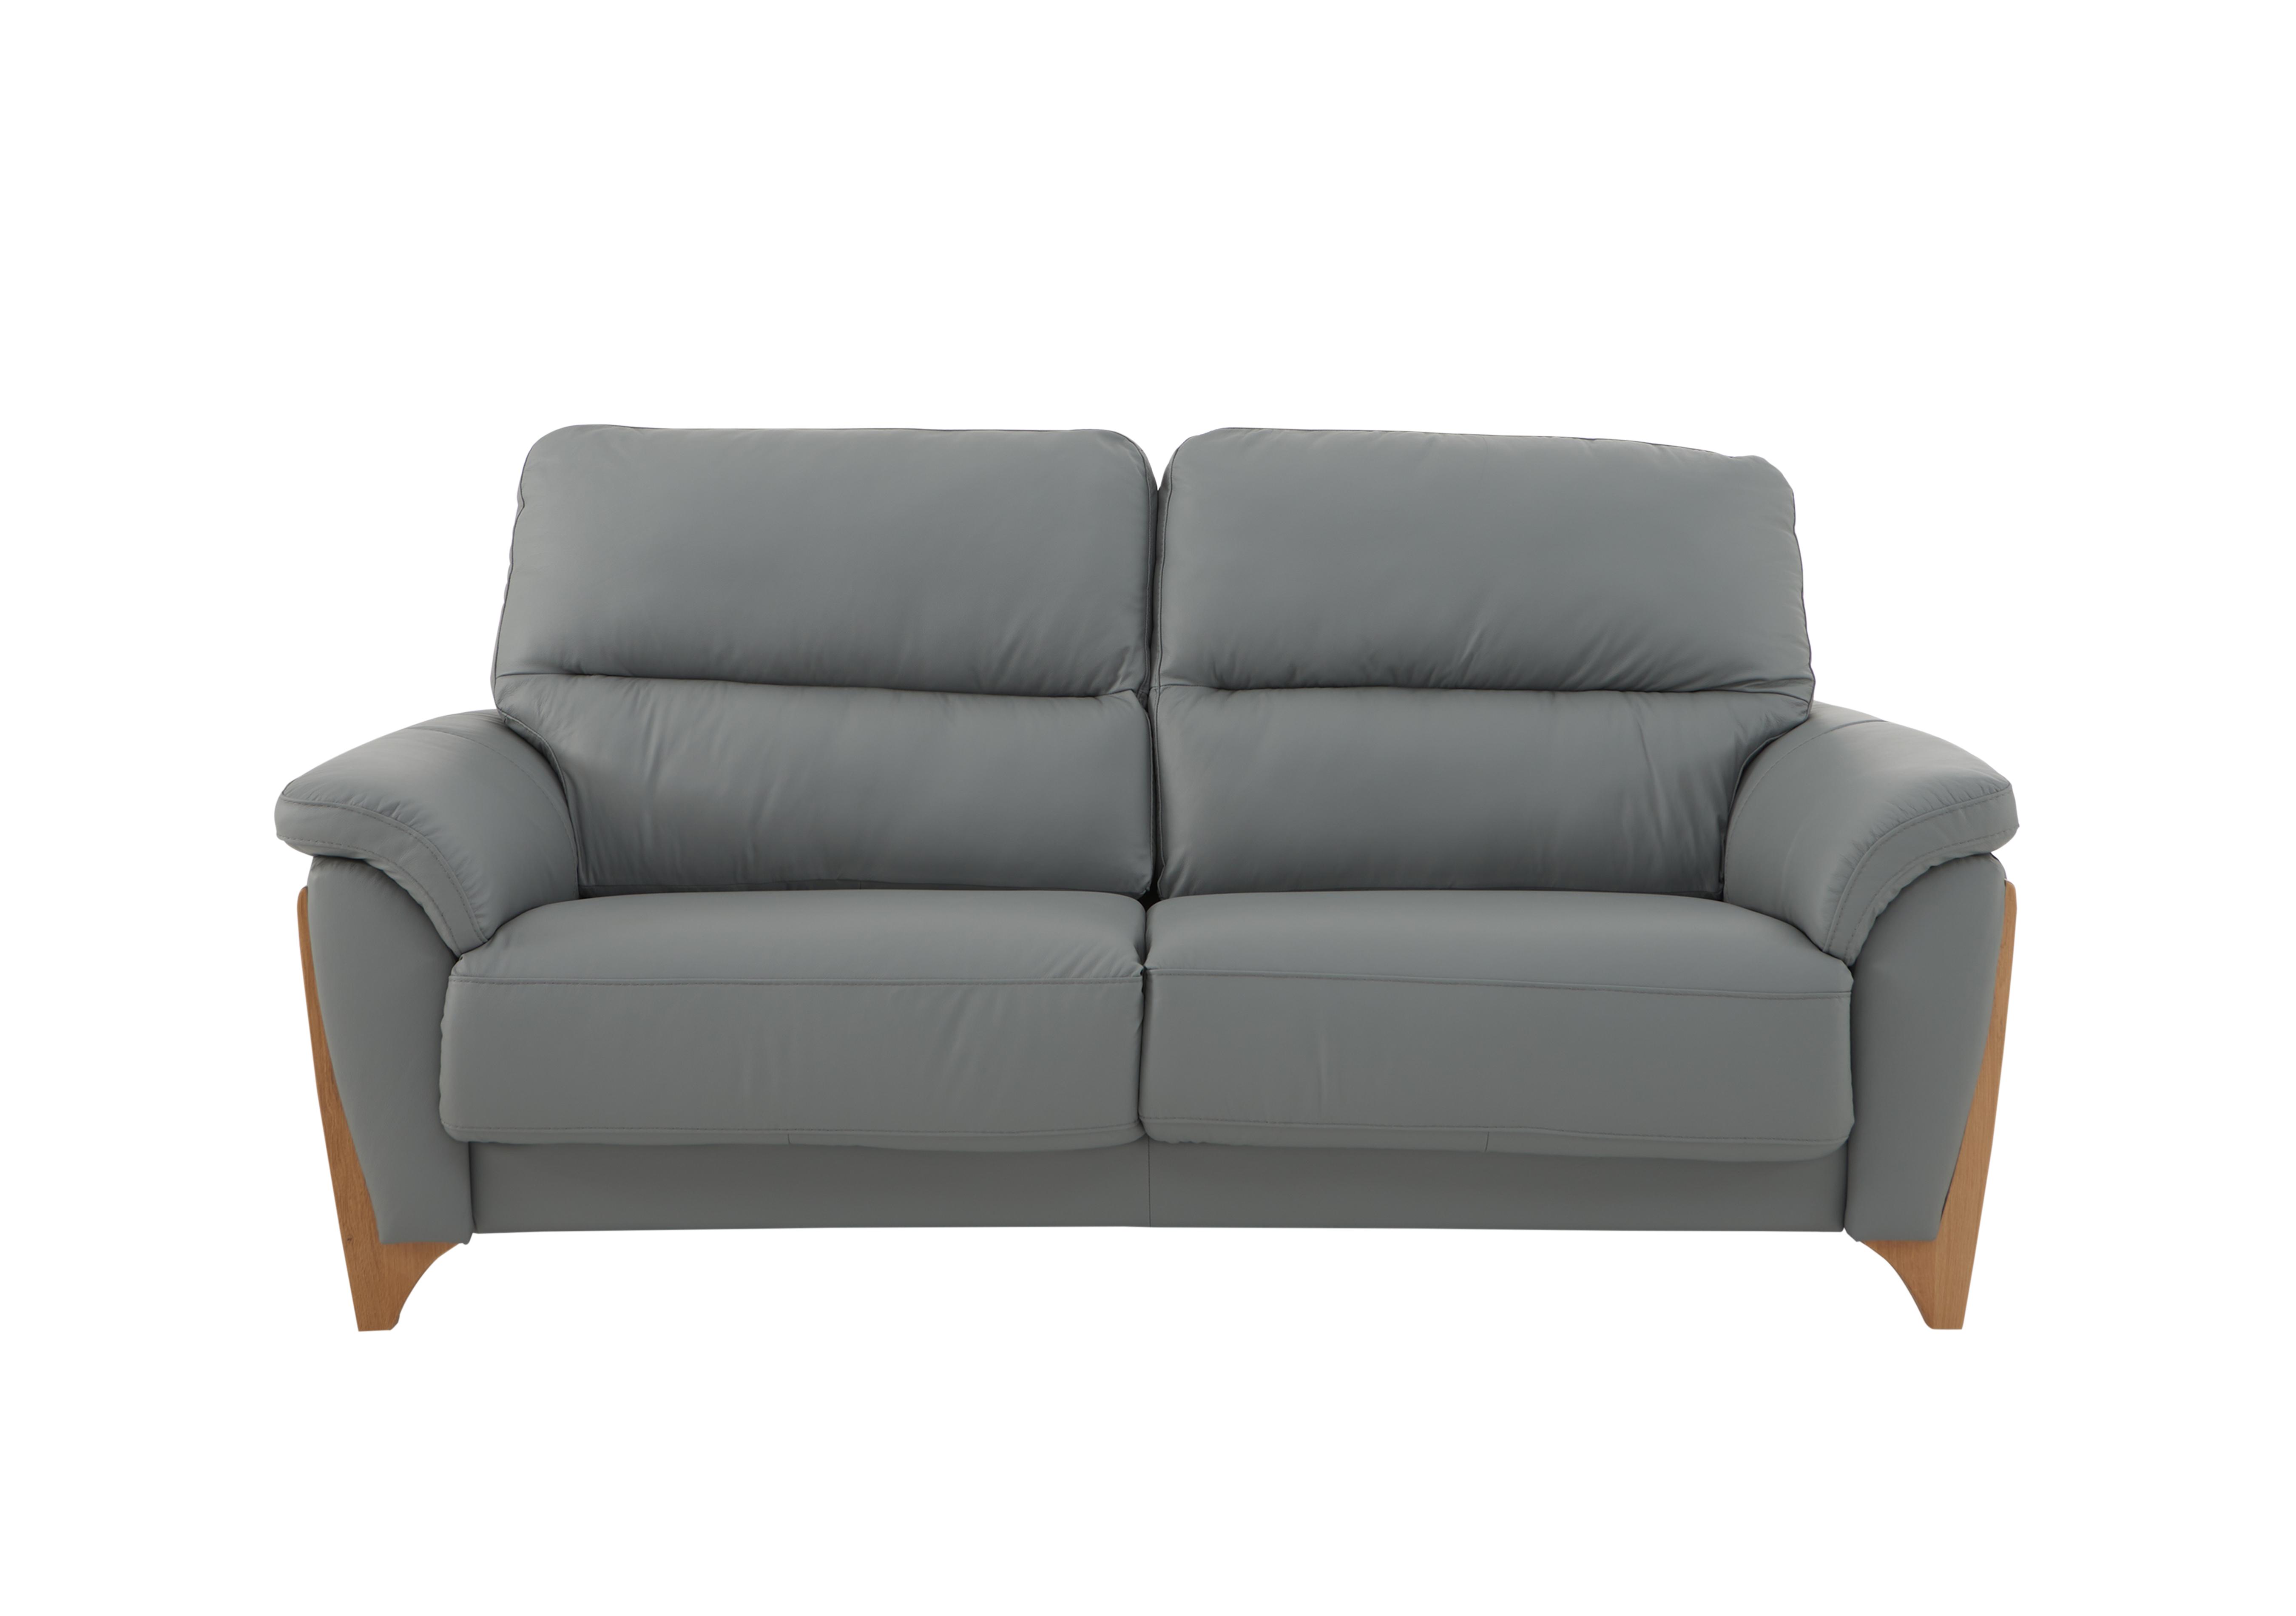 Enna Large Leather Sofa in L956 on Furniture Village